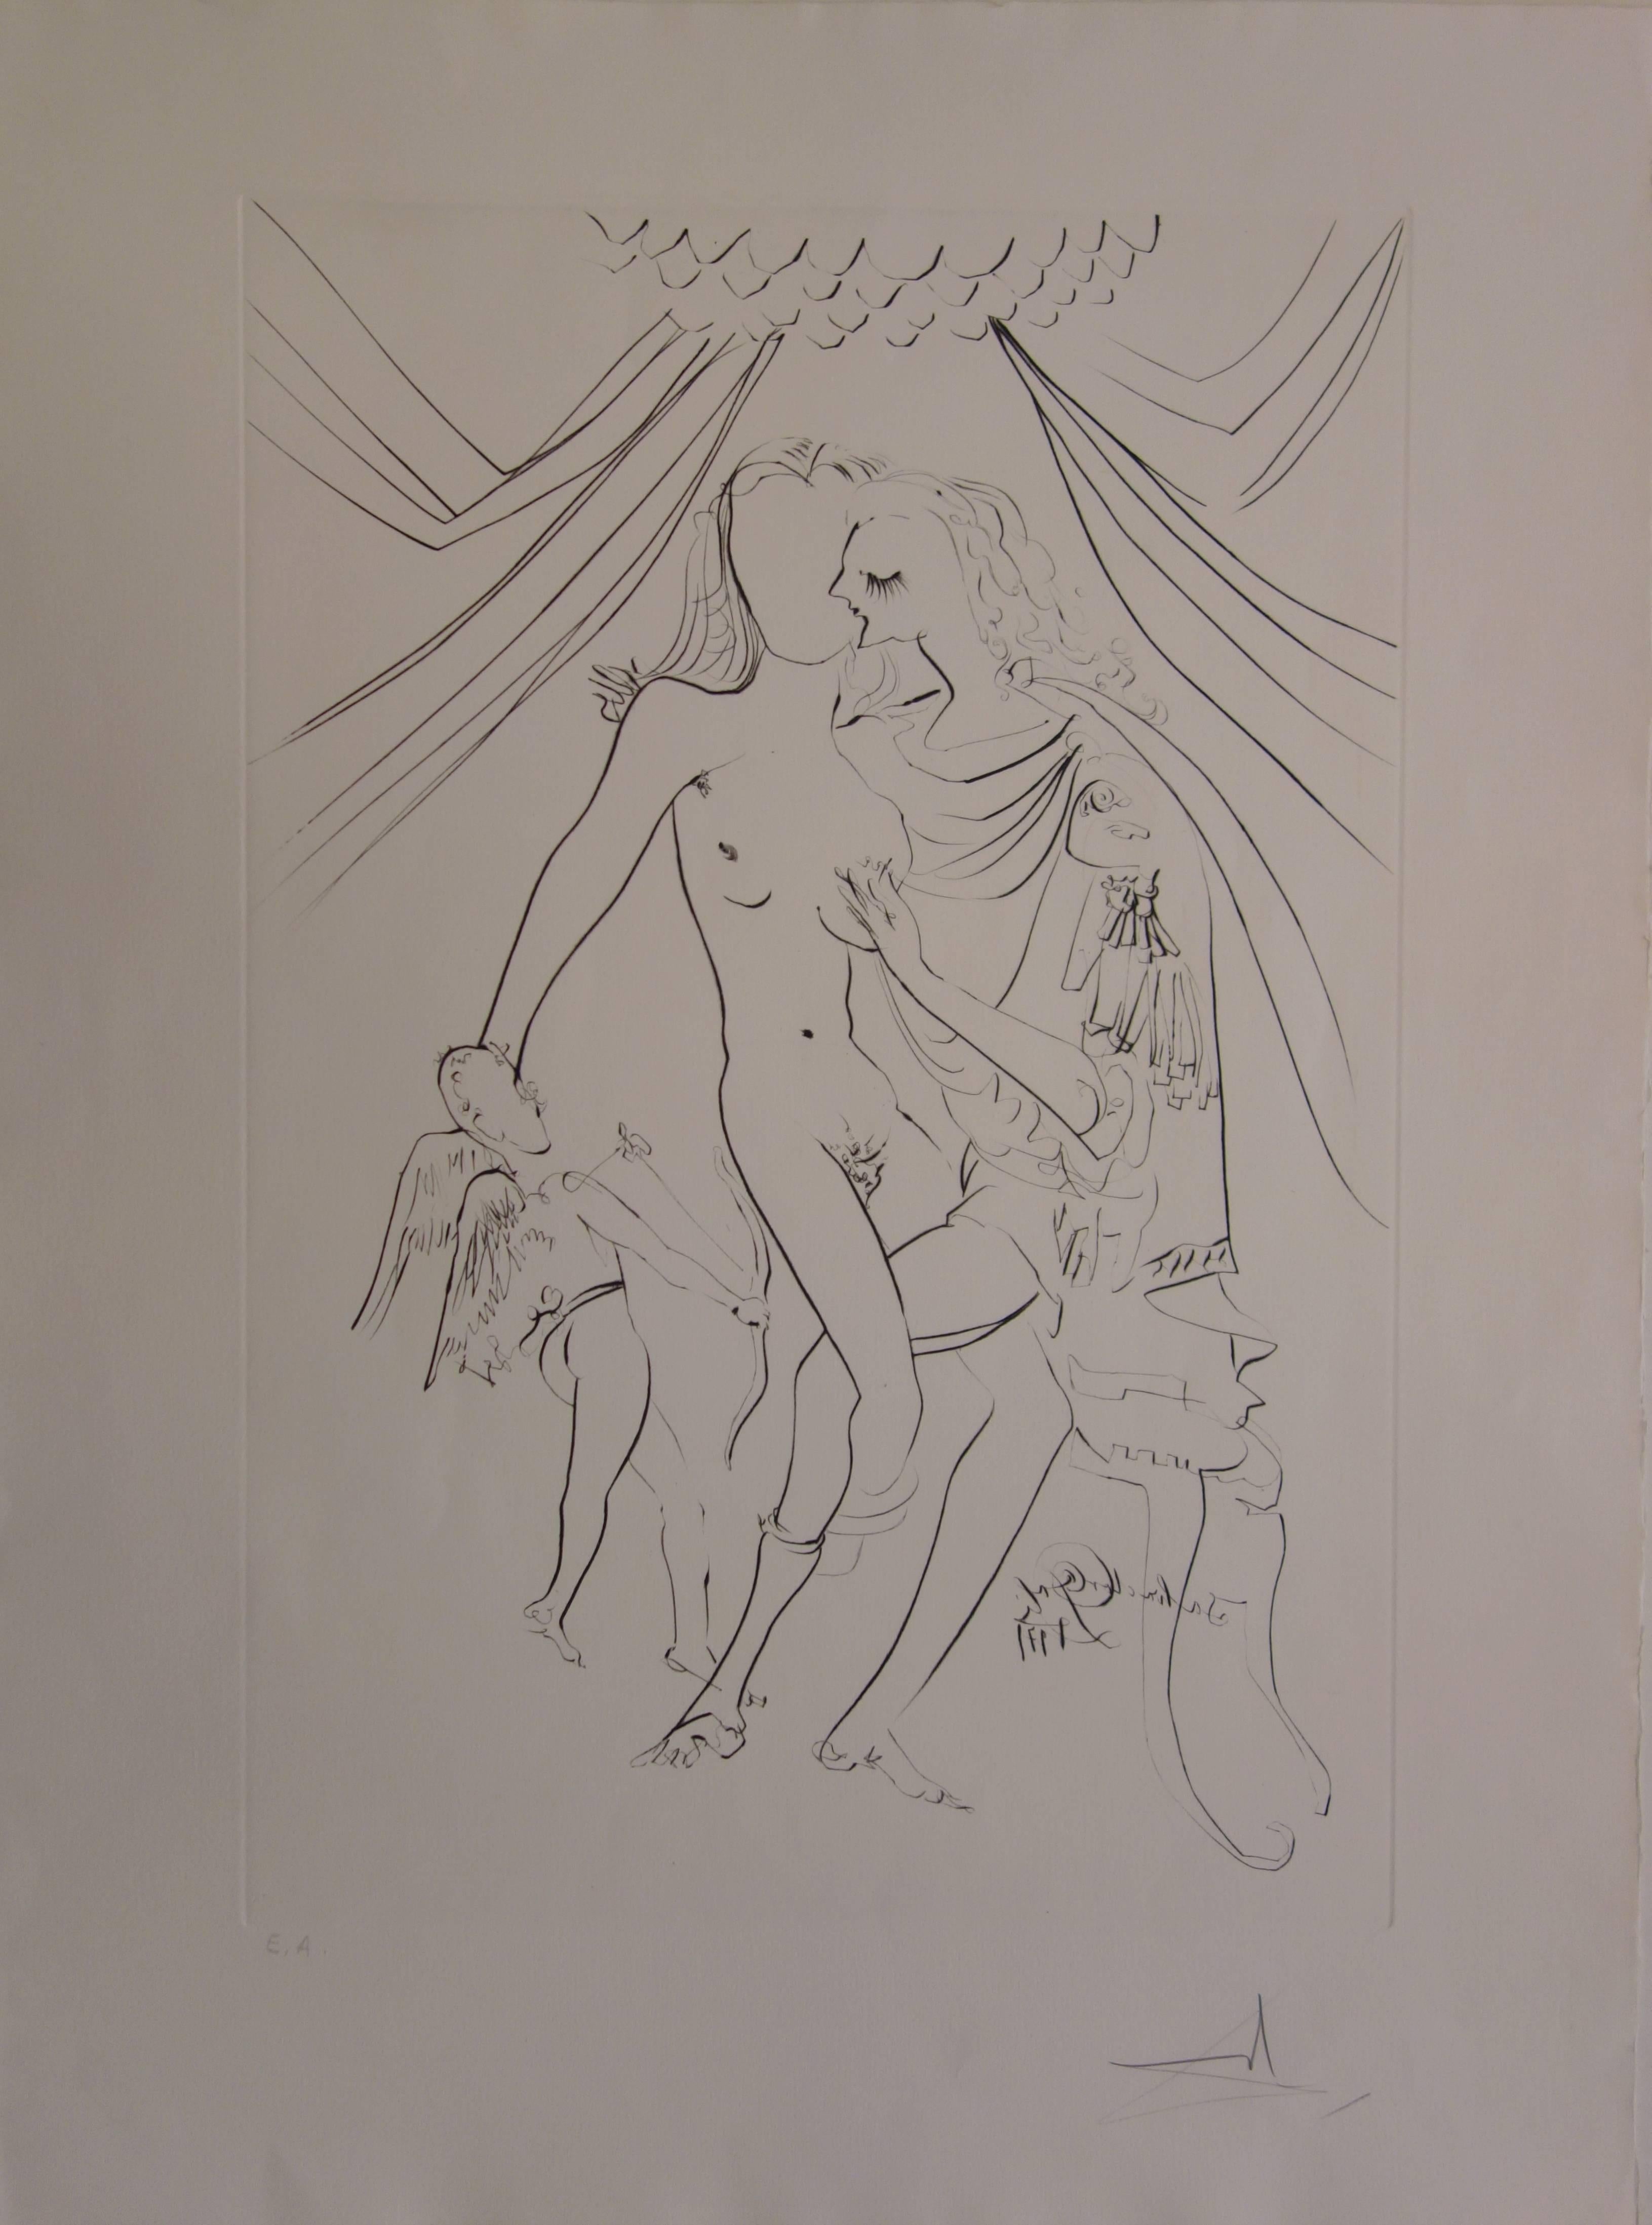 Salvador Dalí Figurative Print - Venus, Mars et Cupidon - Original etching - 1971 - Artist proof